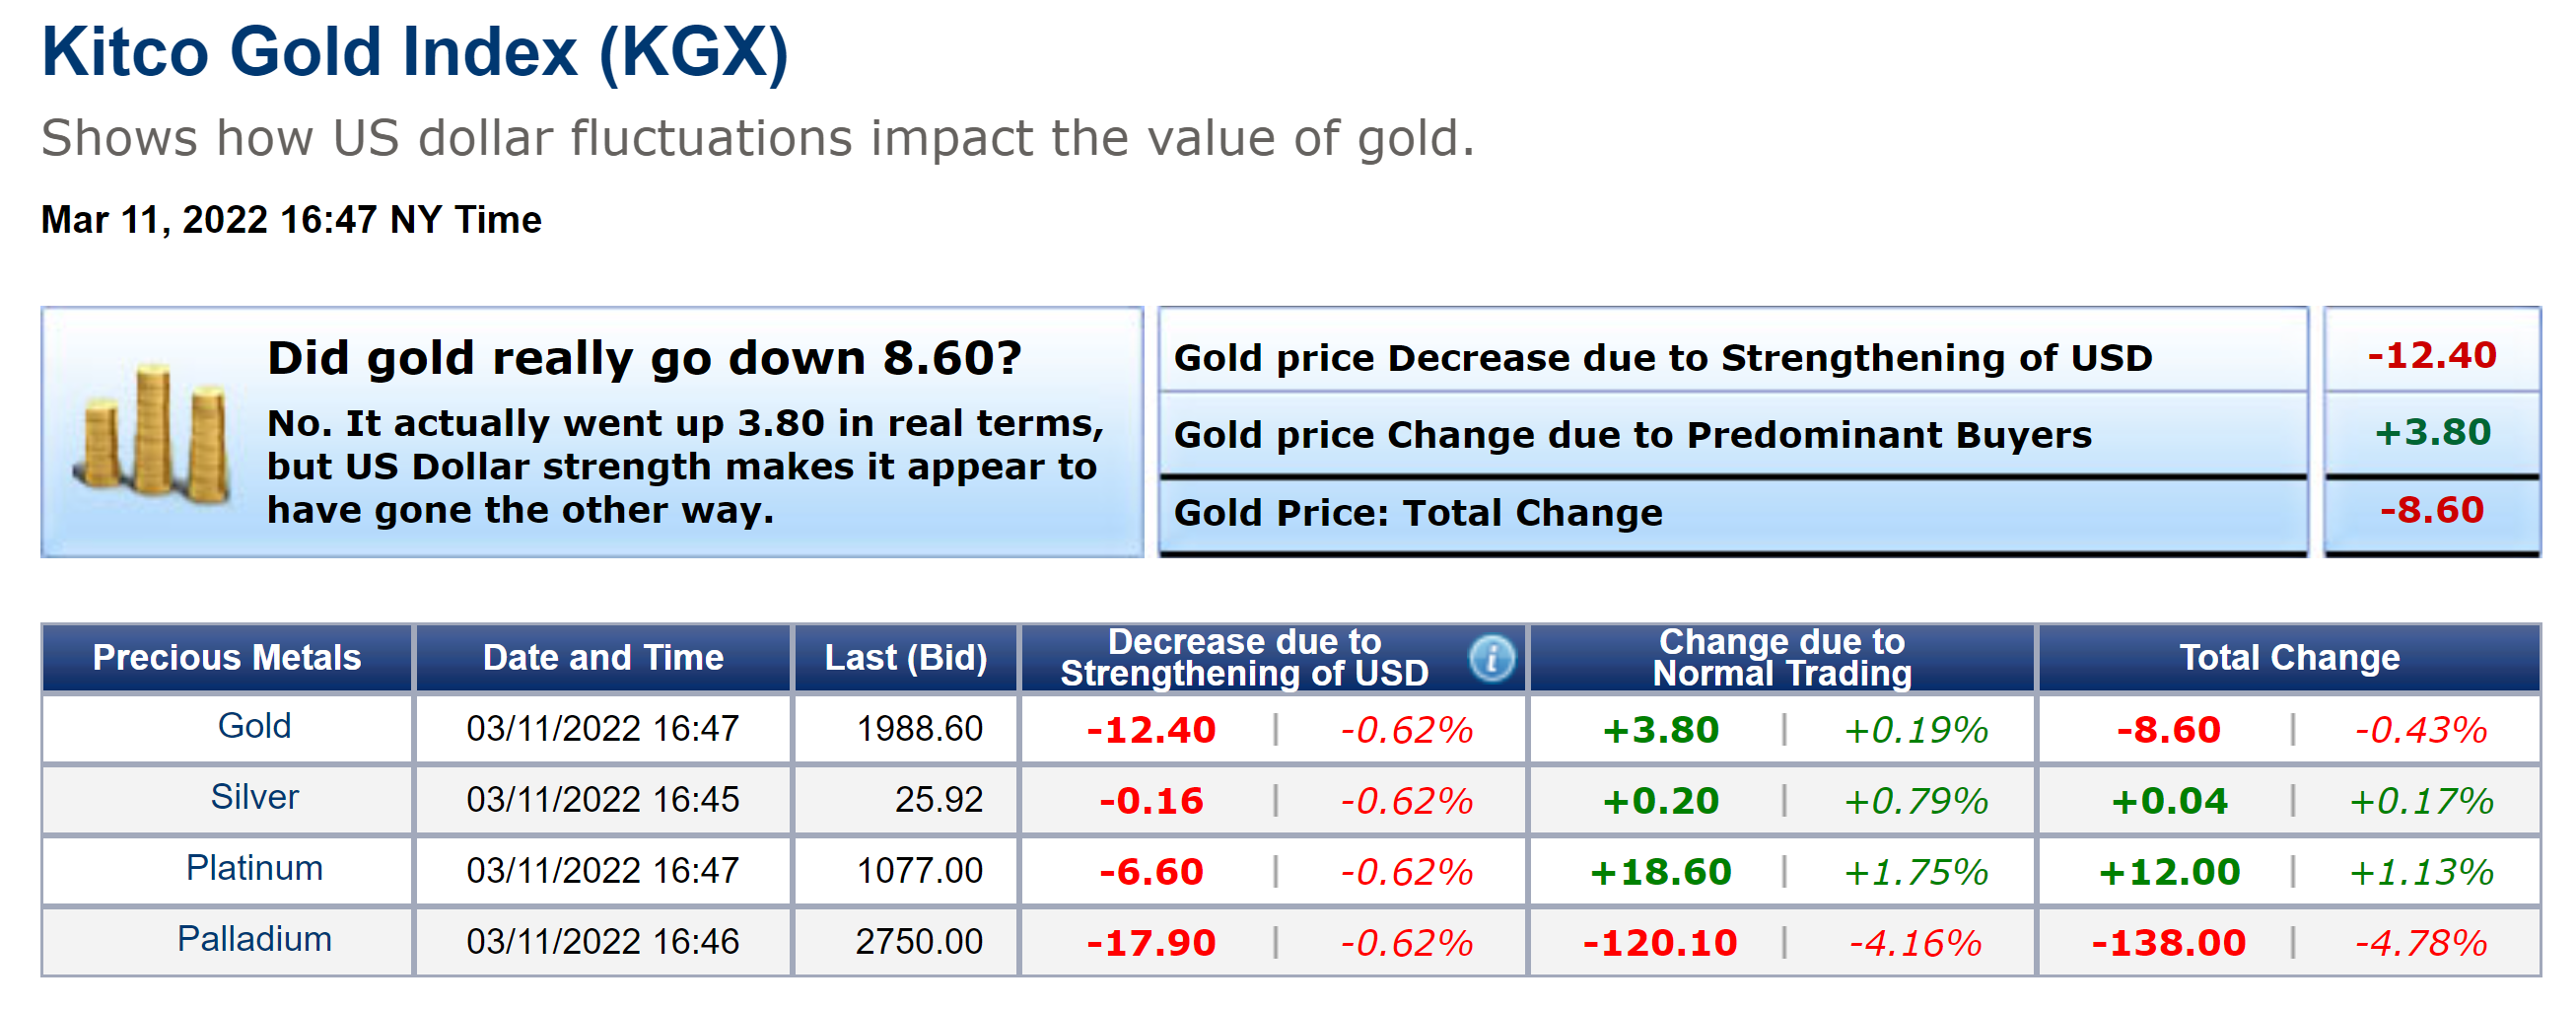 Kitco Gold Index (KGX)